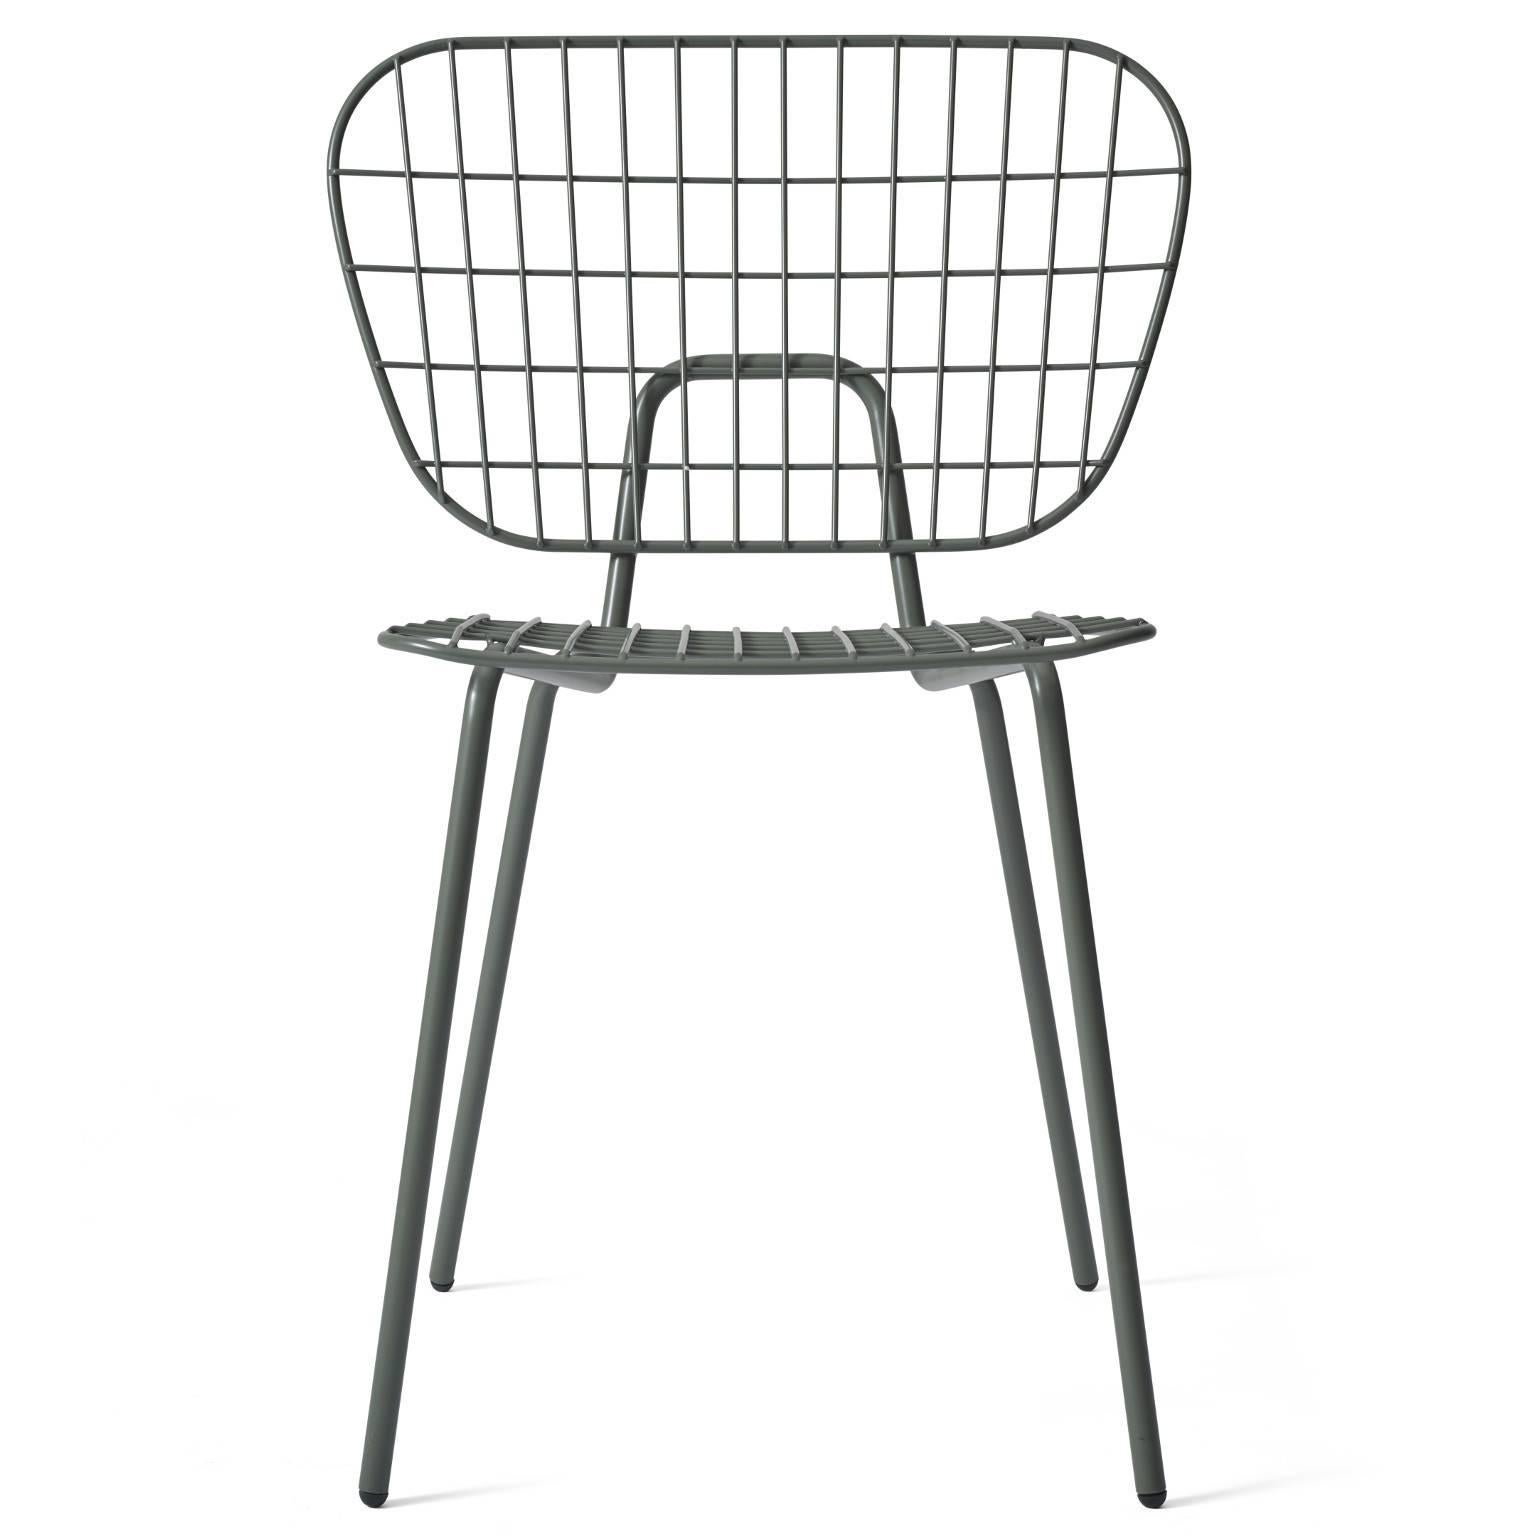 Scandinavian Modern Wm String Dining Chair by Studio Wm, in Two-Pack, Black Steel Frame